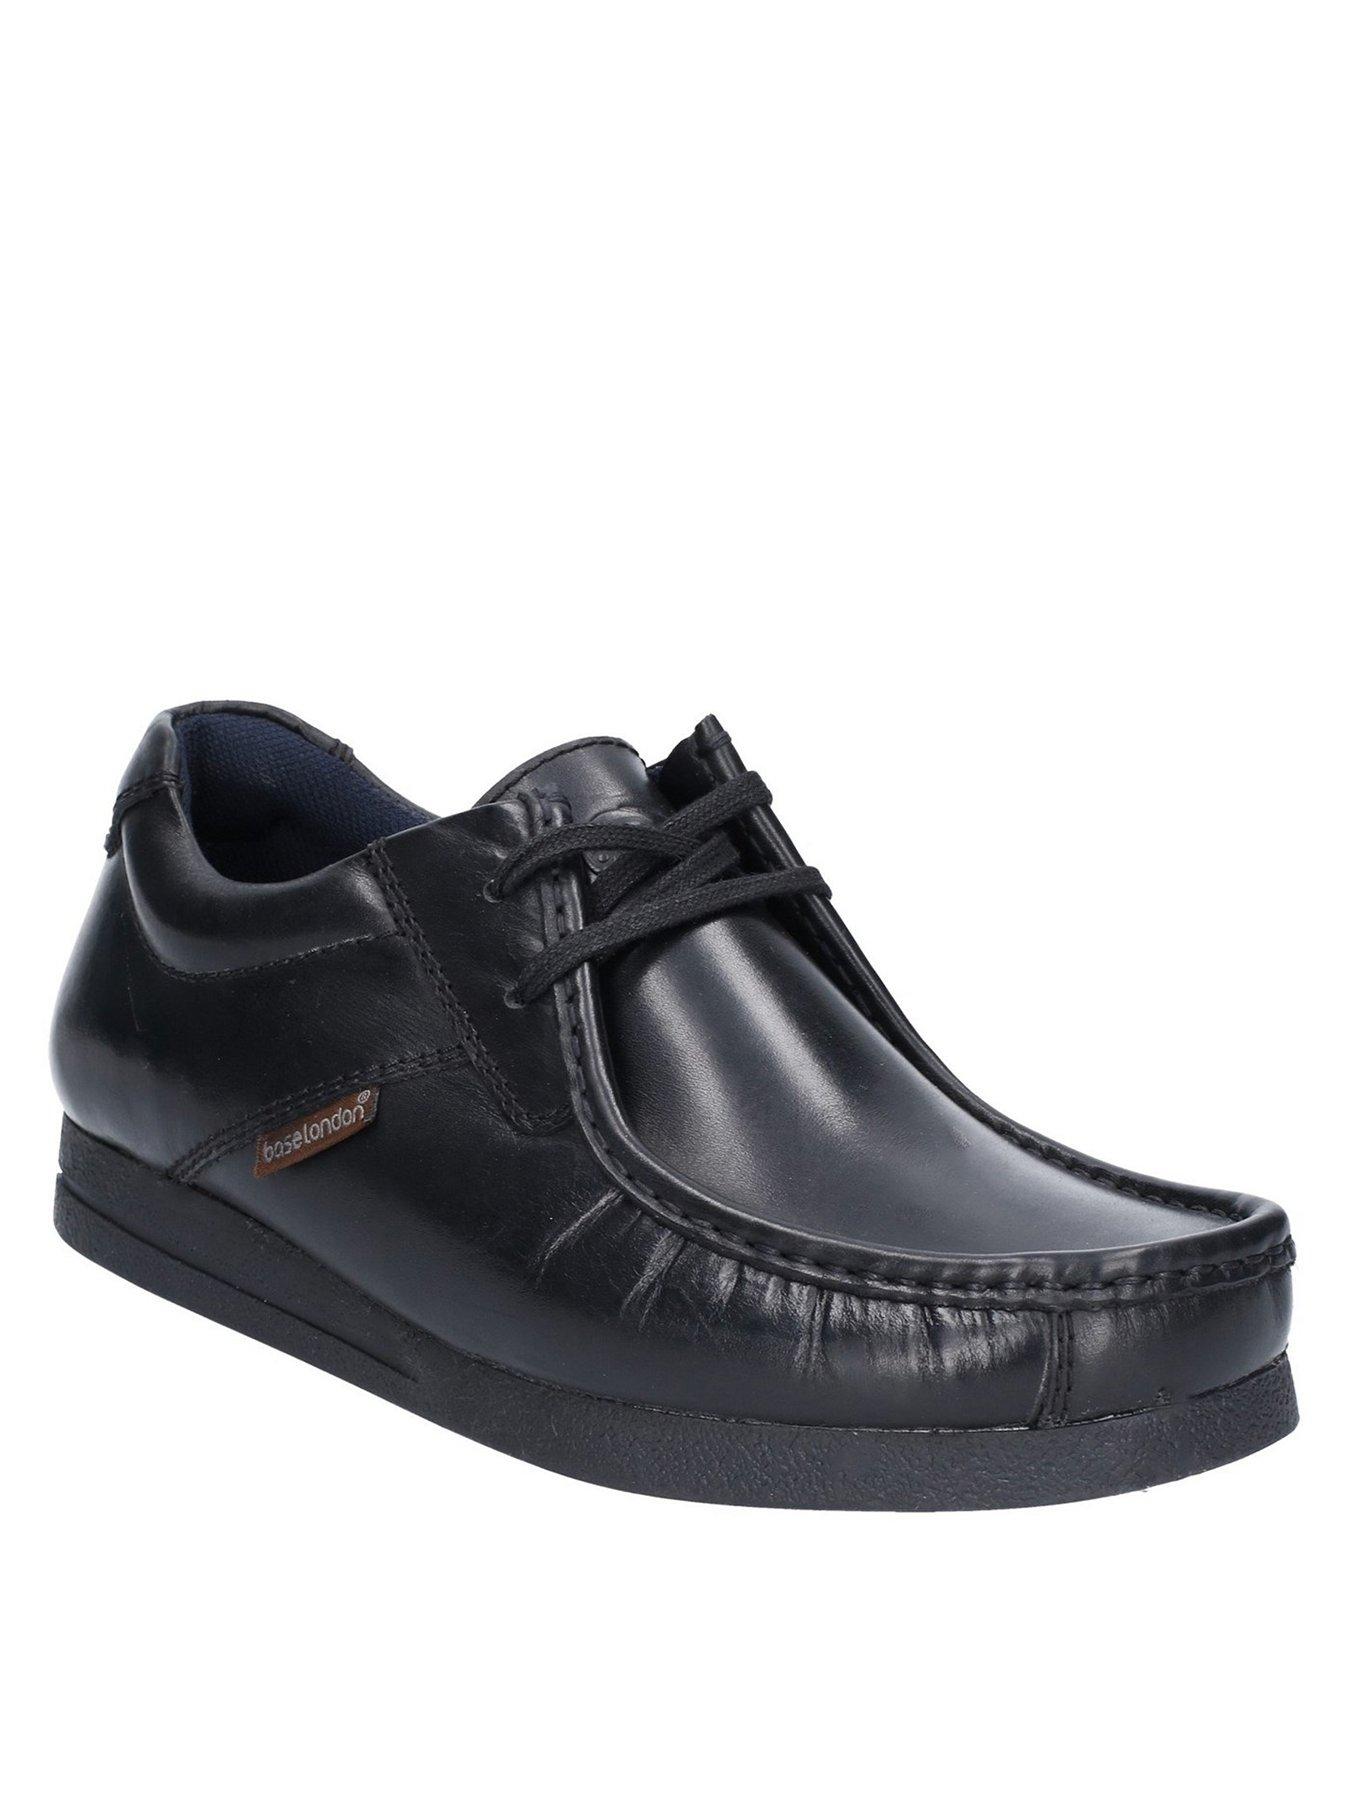 Kett 38B Base London SAGE Mens Waxy Black Leather Lace-up Shoe 